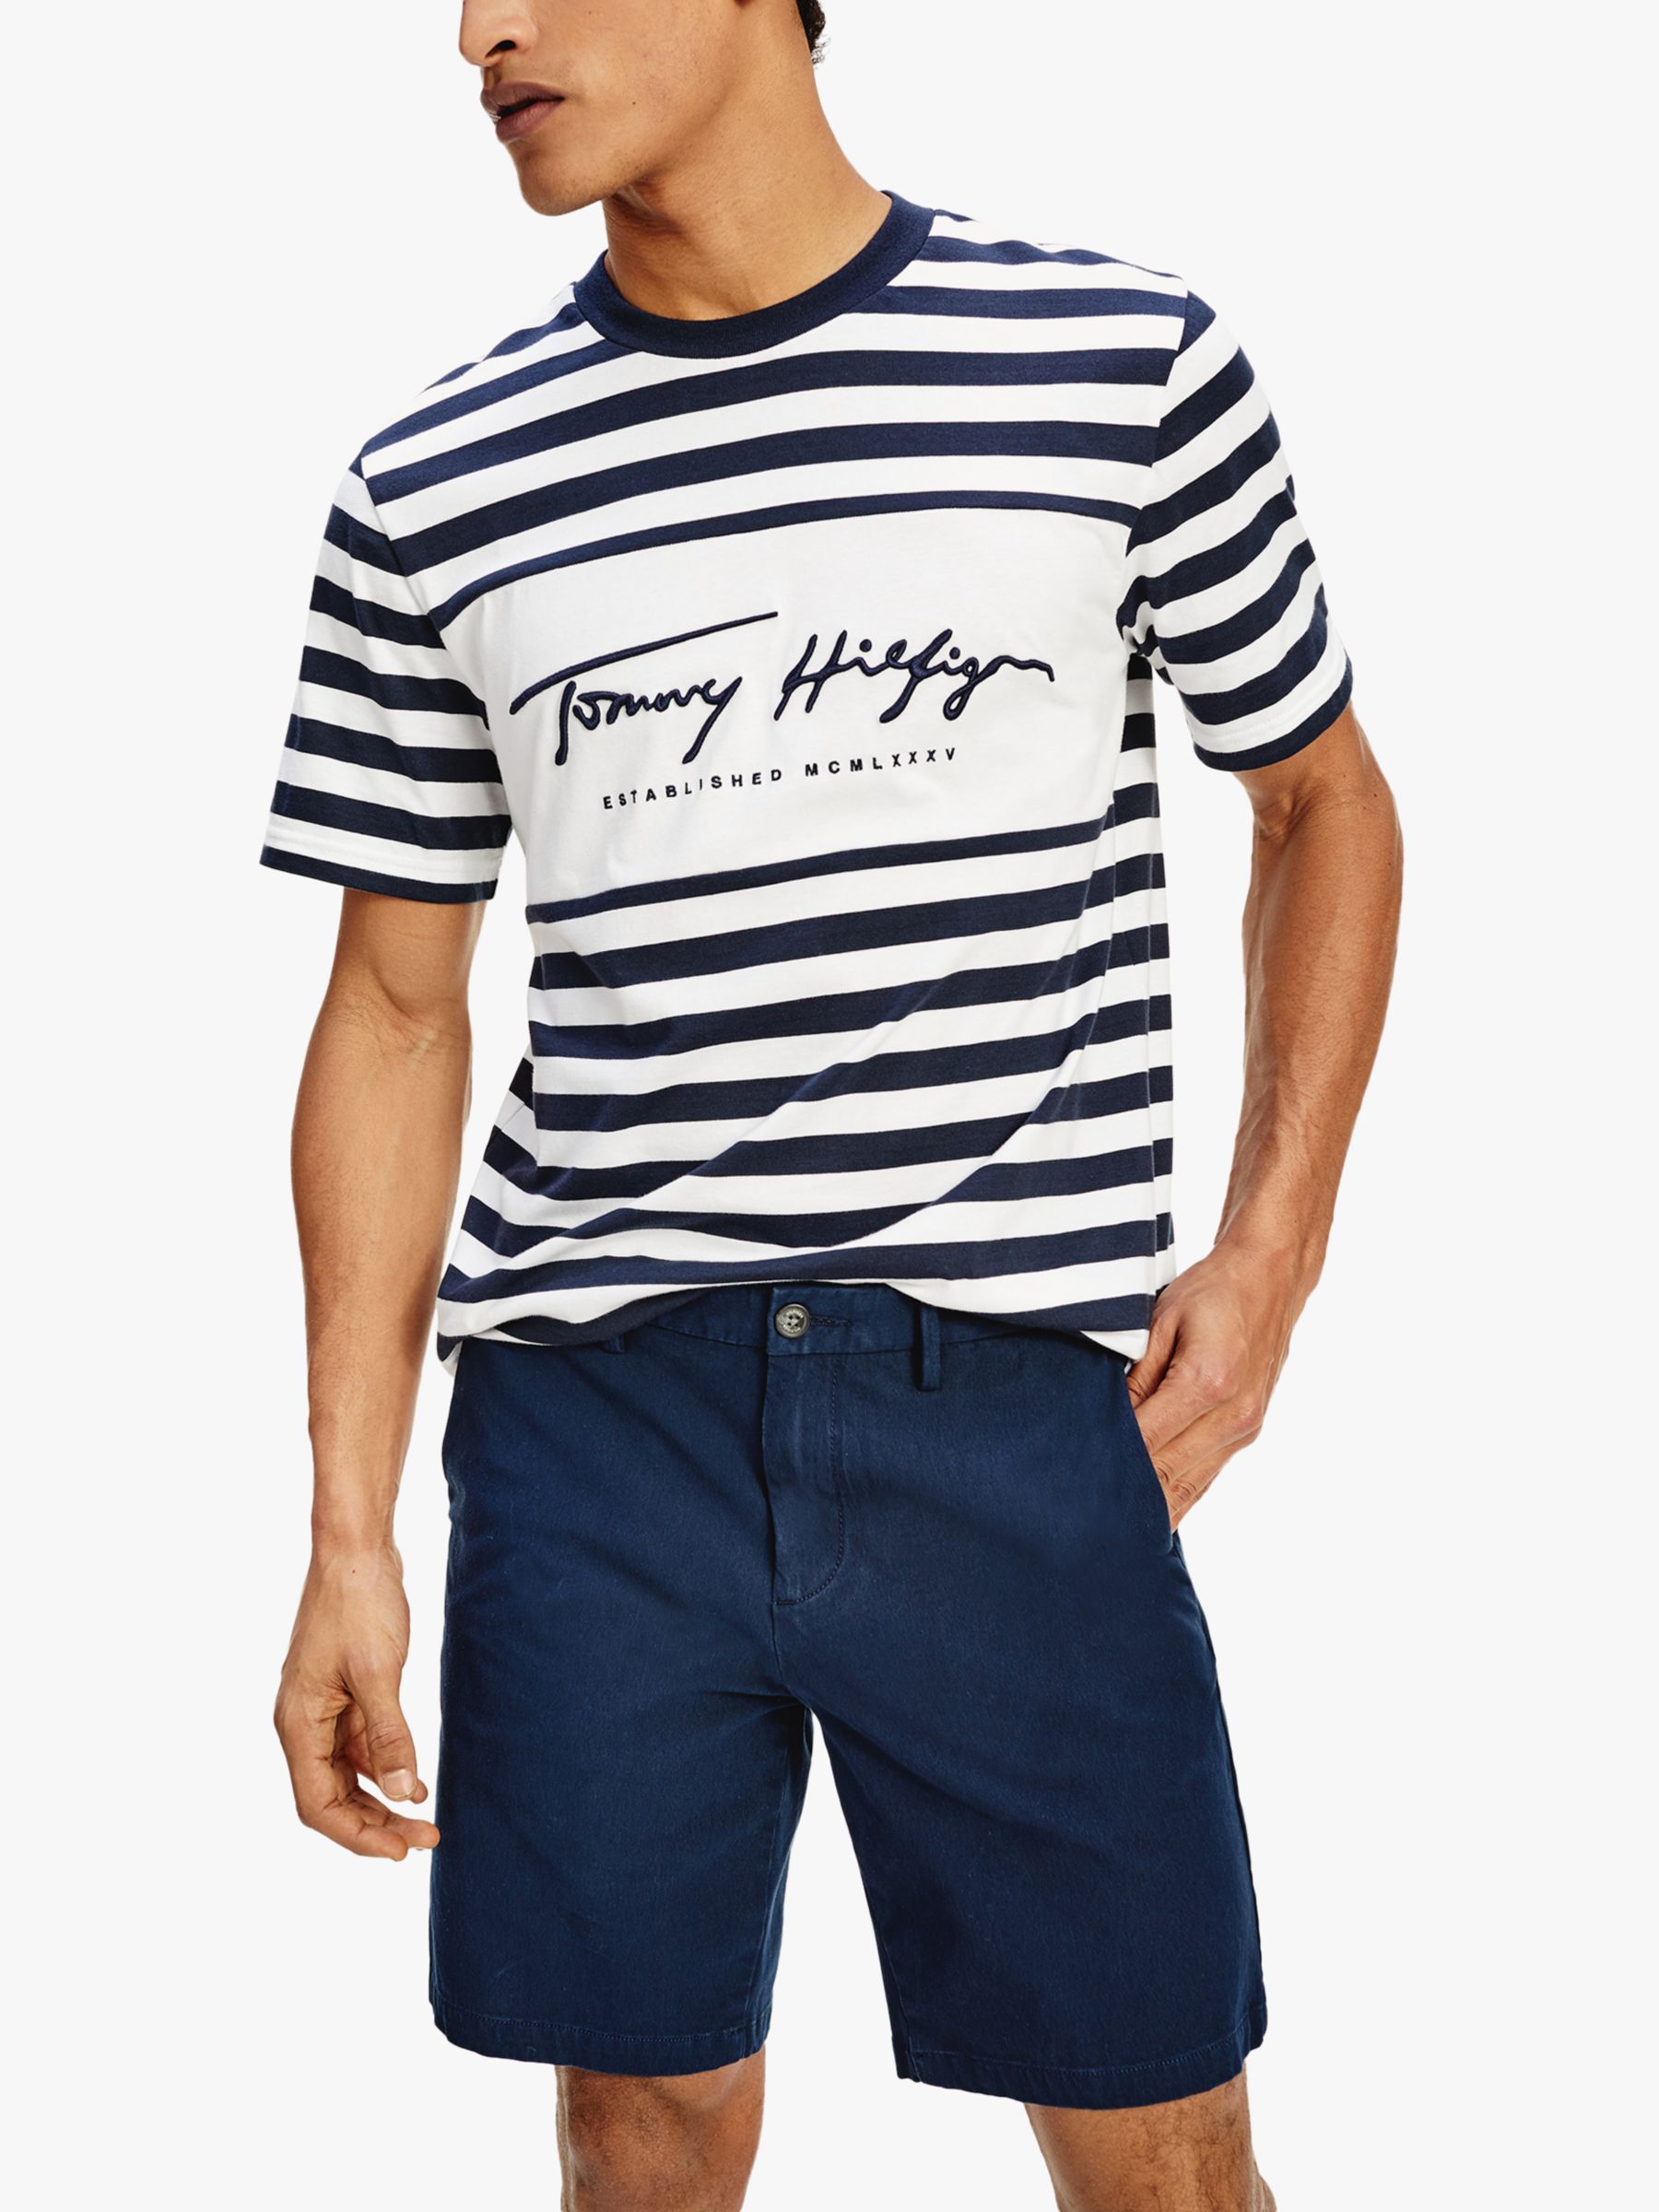 hilfiger striped t shirt